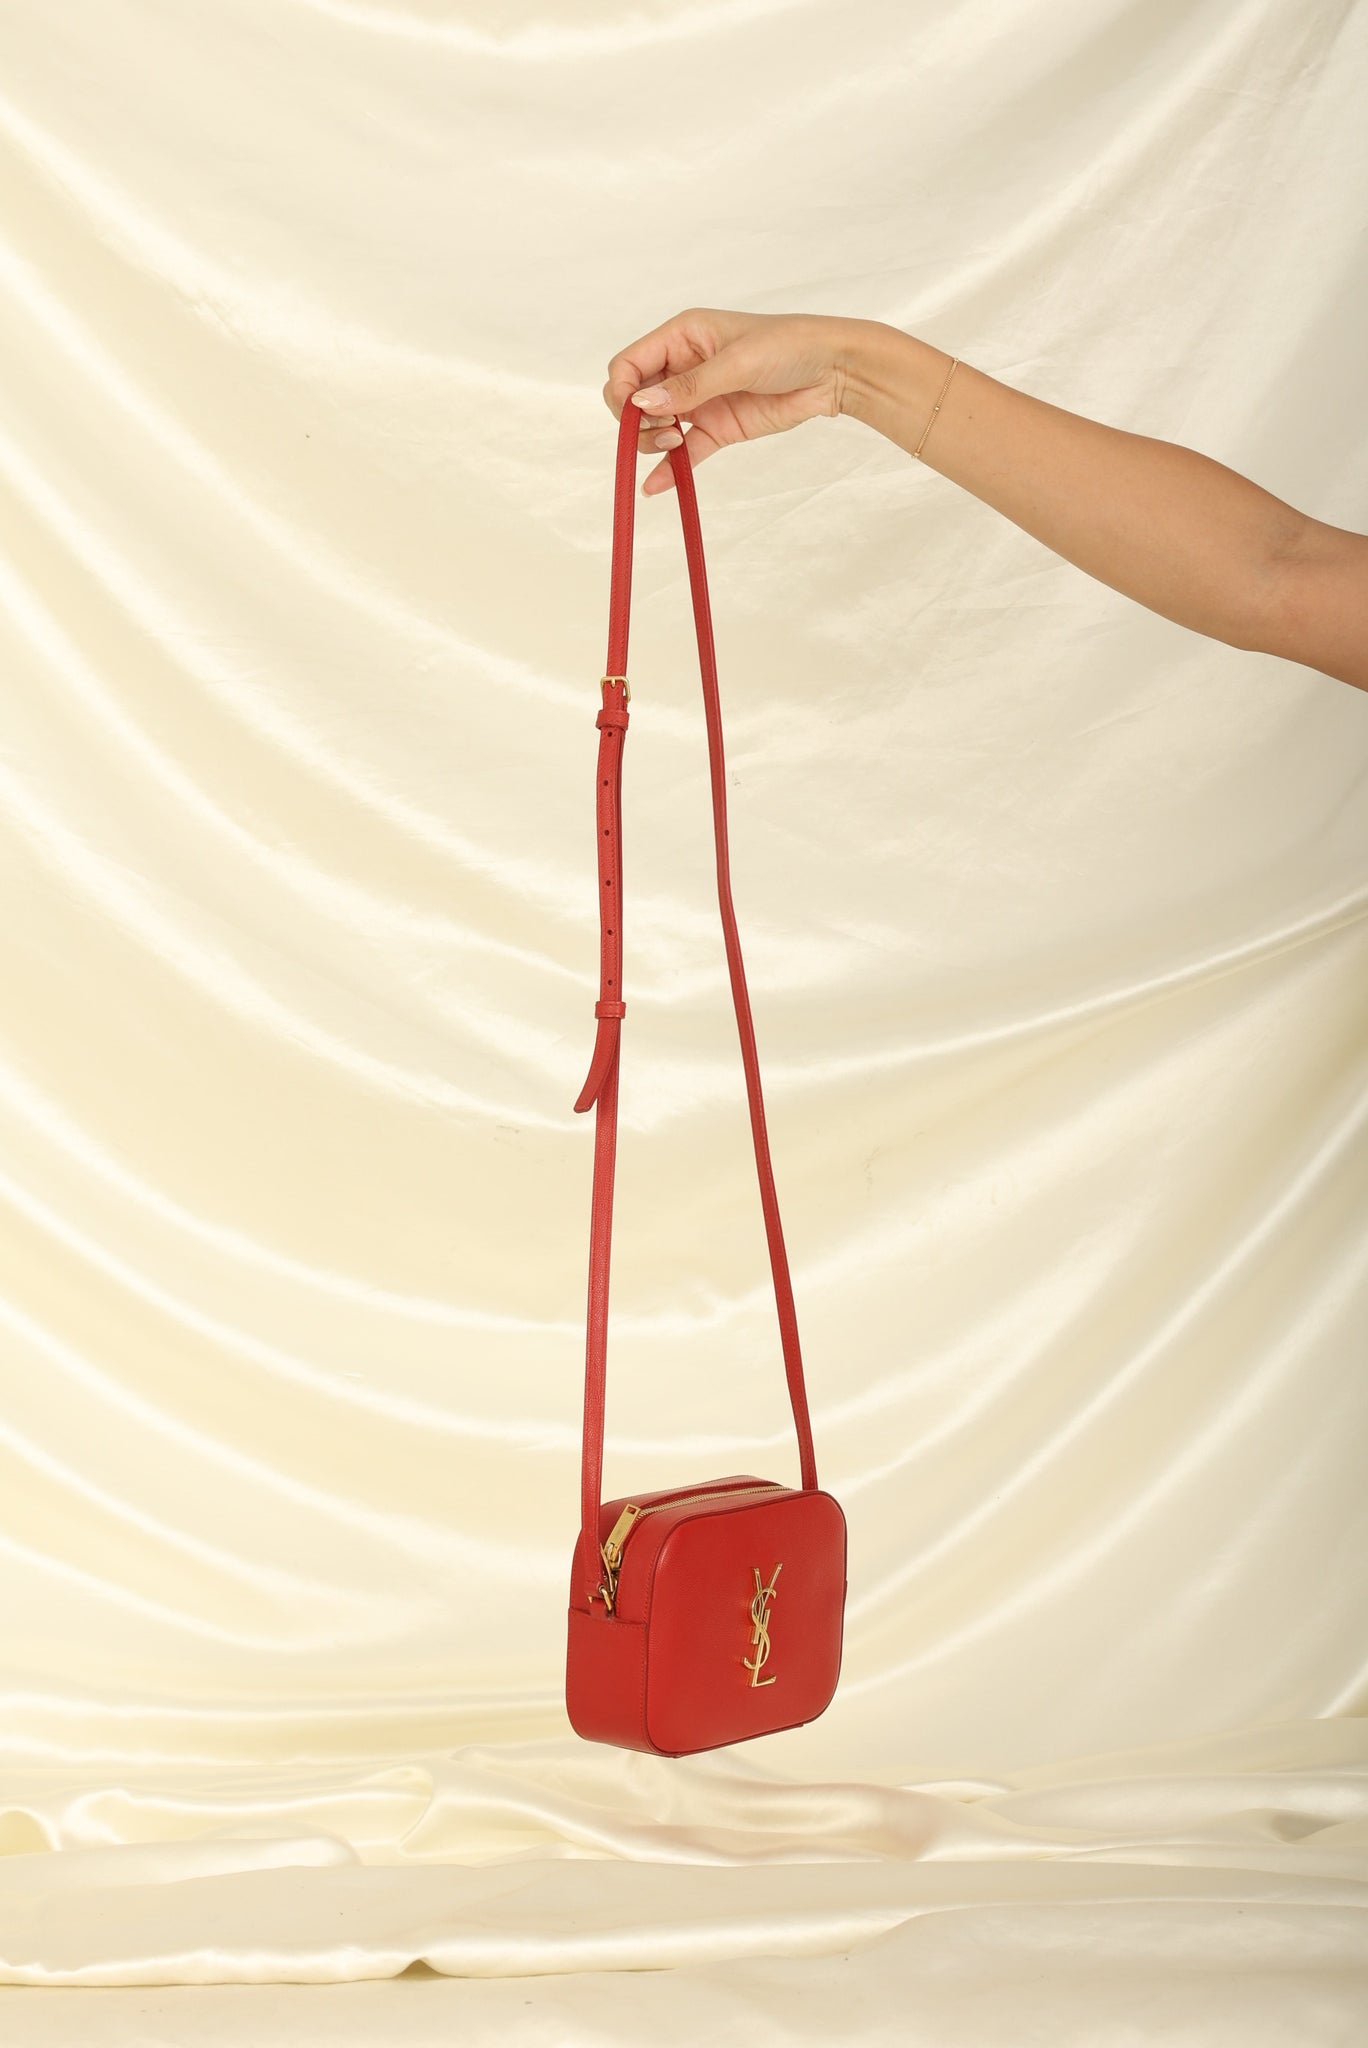 Saint Laurent Leather Red Camera Bag